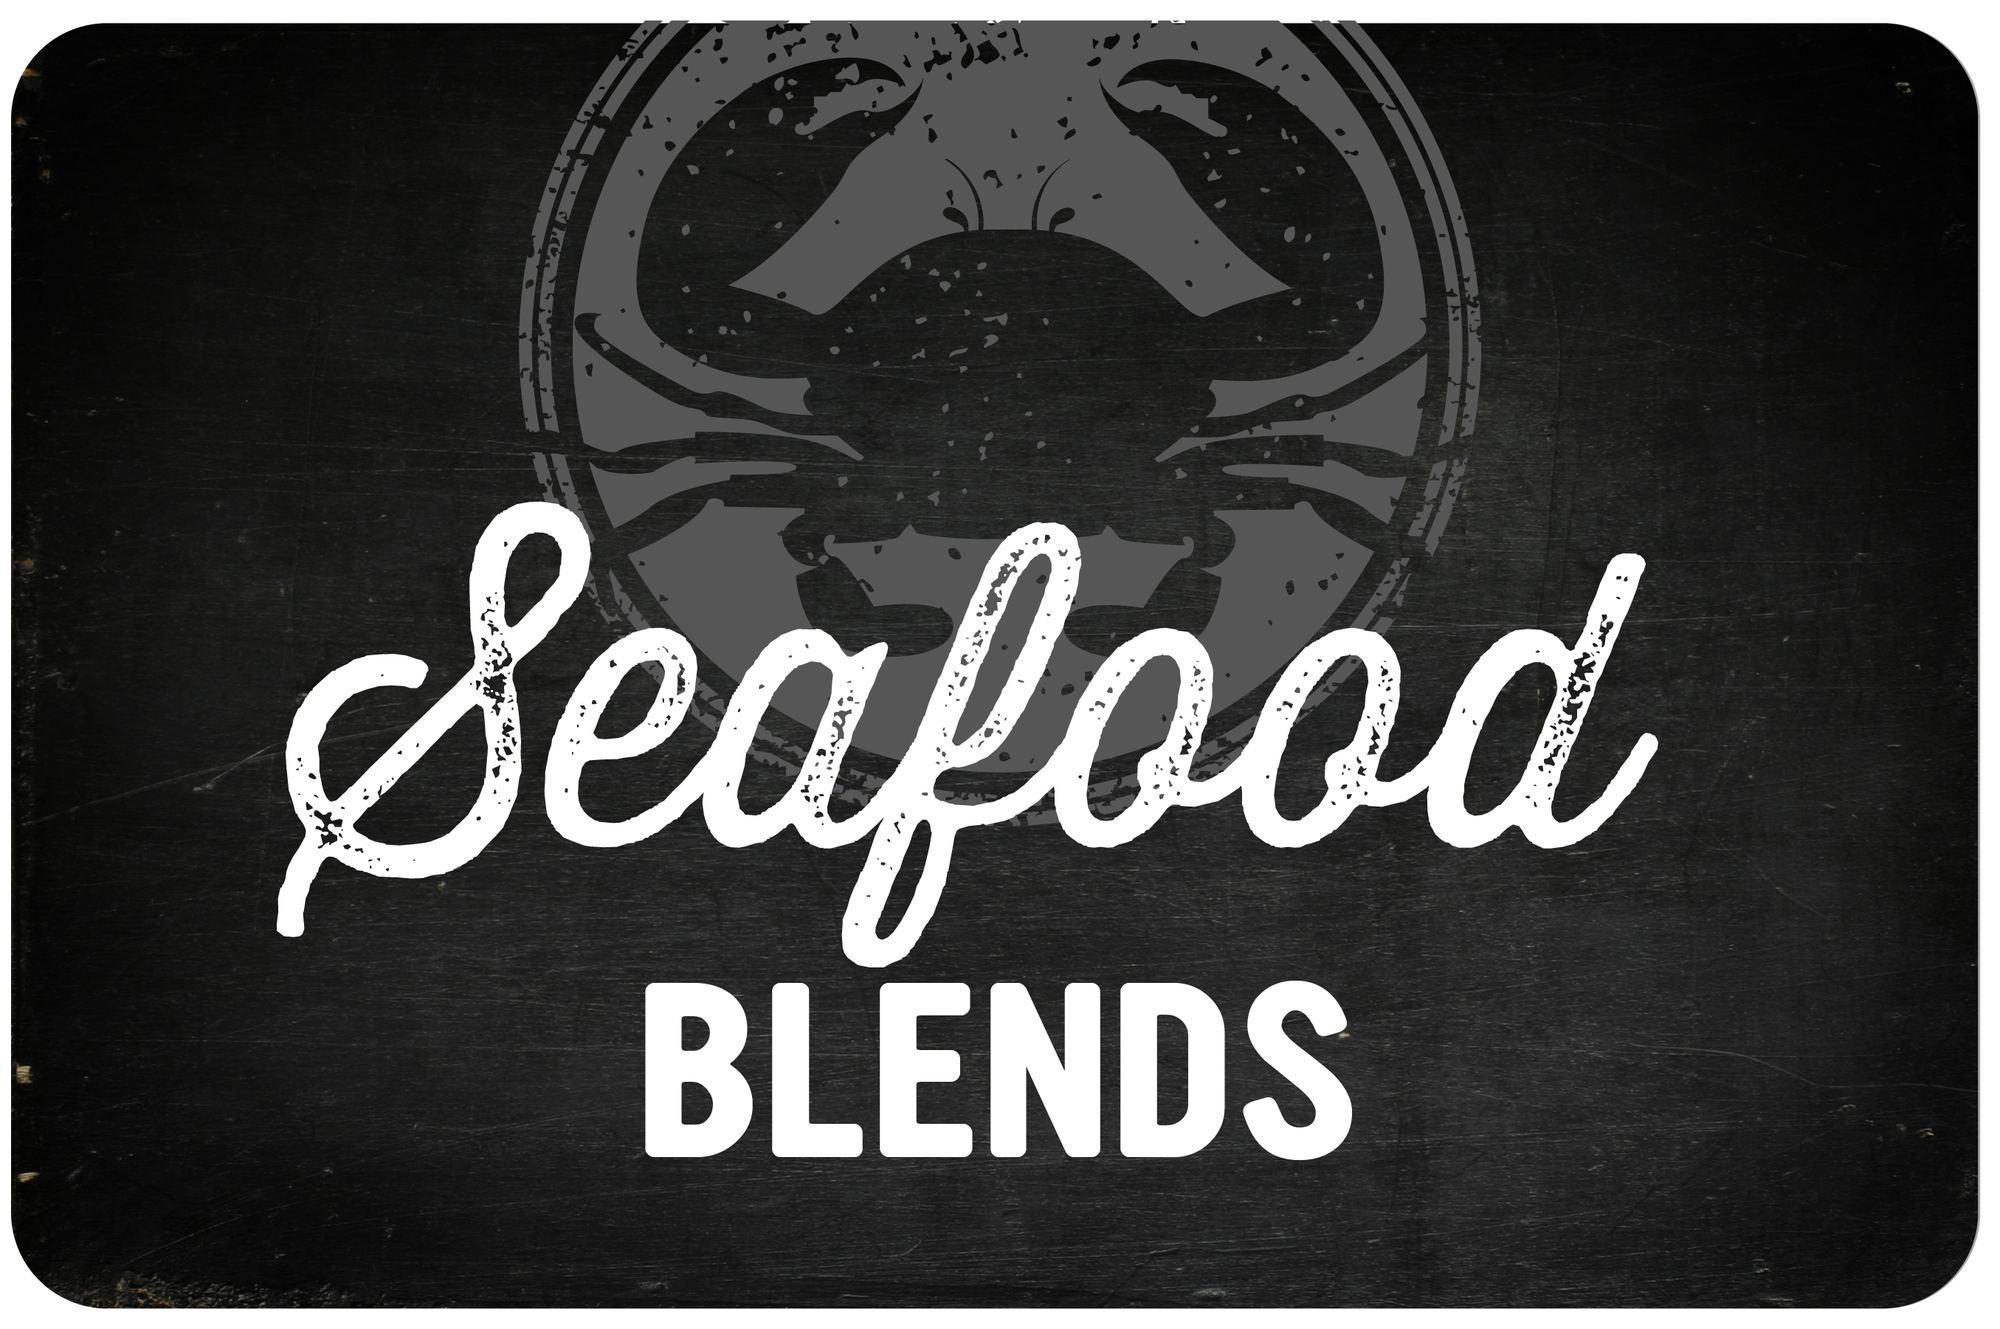 Seafood Blends